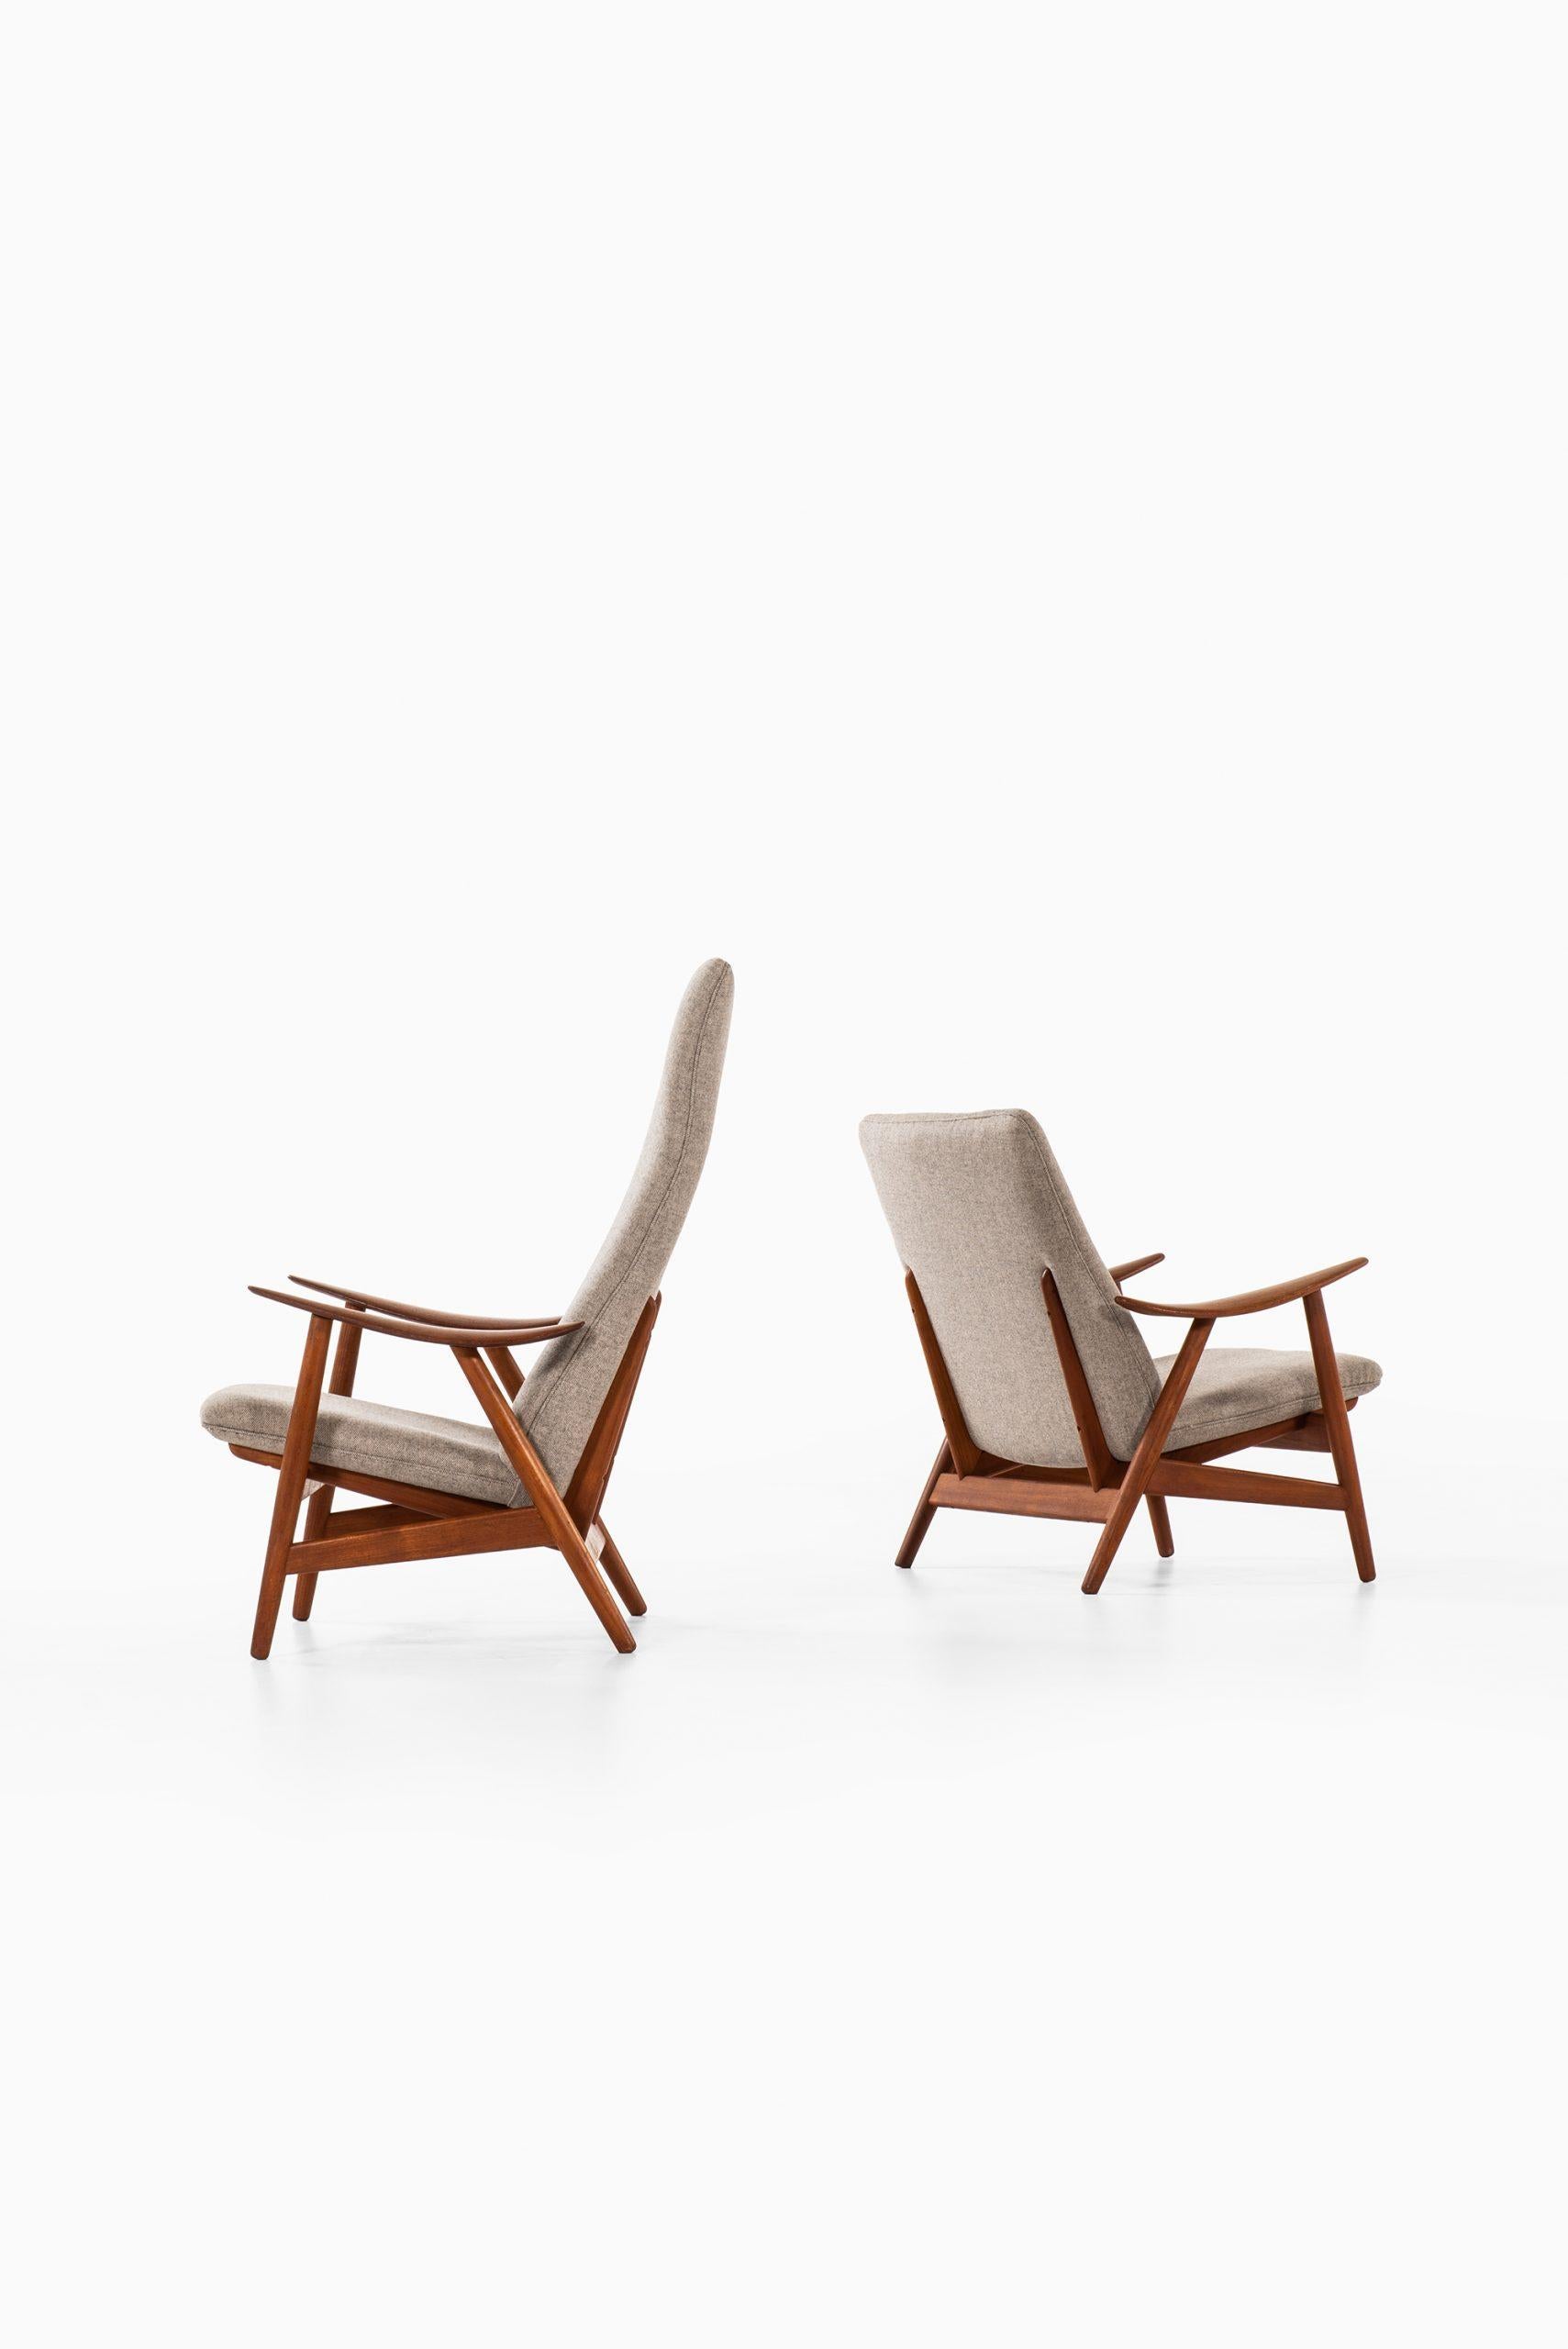 Very rare pair of easy chairs model 10 designed by Illum Wikkelsø. Produced by Søren Willadsen Møbelfabrik in Denmark.
Dimensions lowback (W x D x H): 80 x 78 x 80 cm, SH 38 cm.
Dimensions highback (W x D x H): 80 x 80 x 103 cm, SH 38 cm.